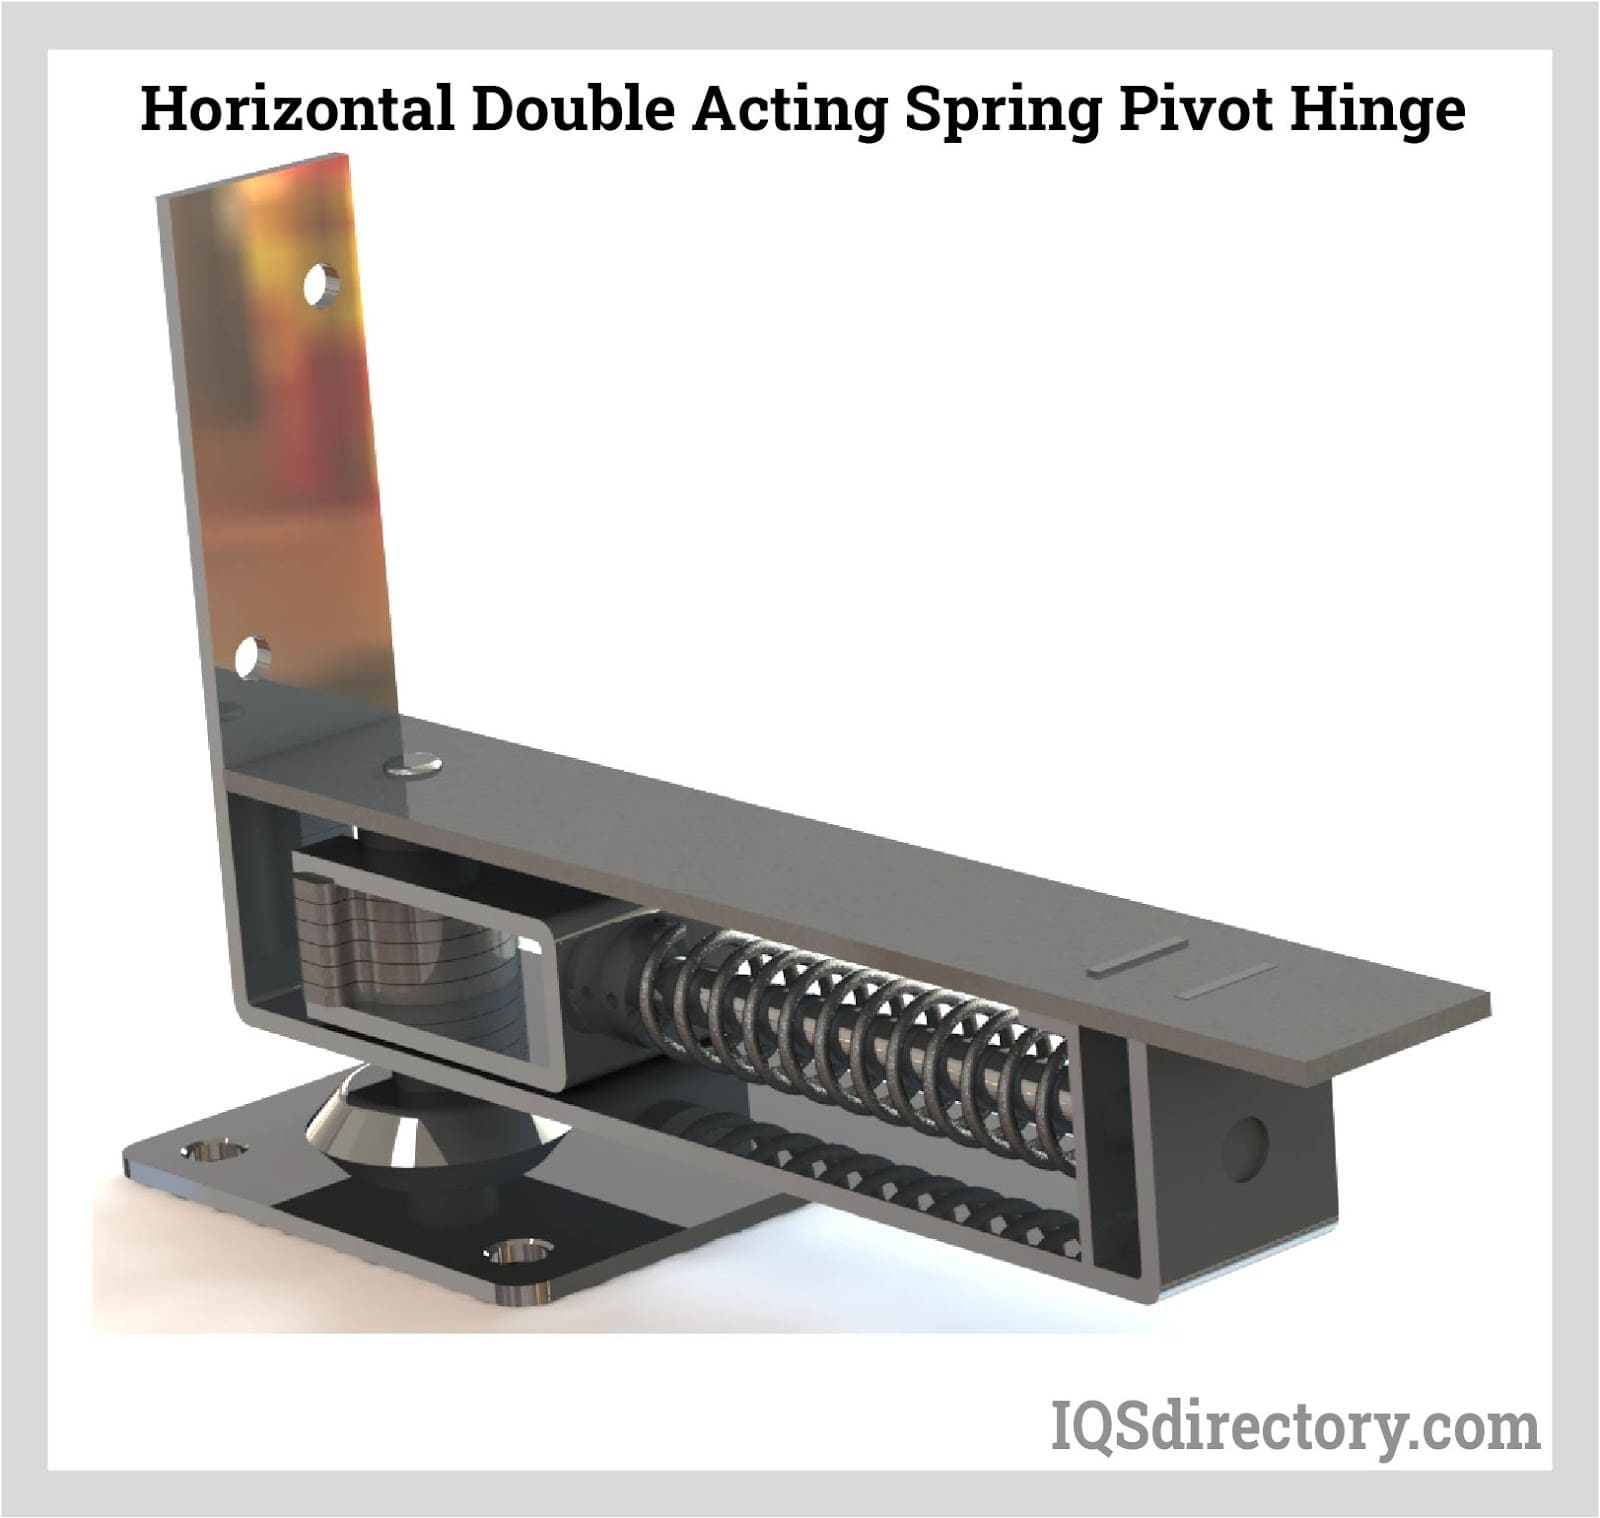 Horizontal Double Acting Spring Pivot Hinge